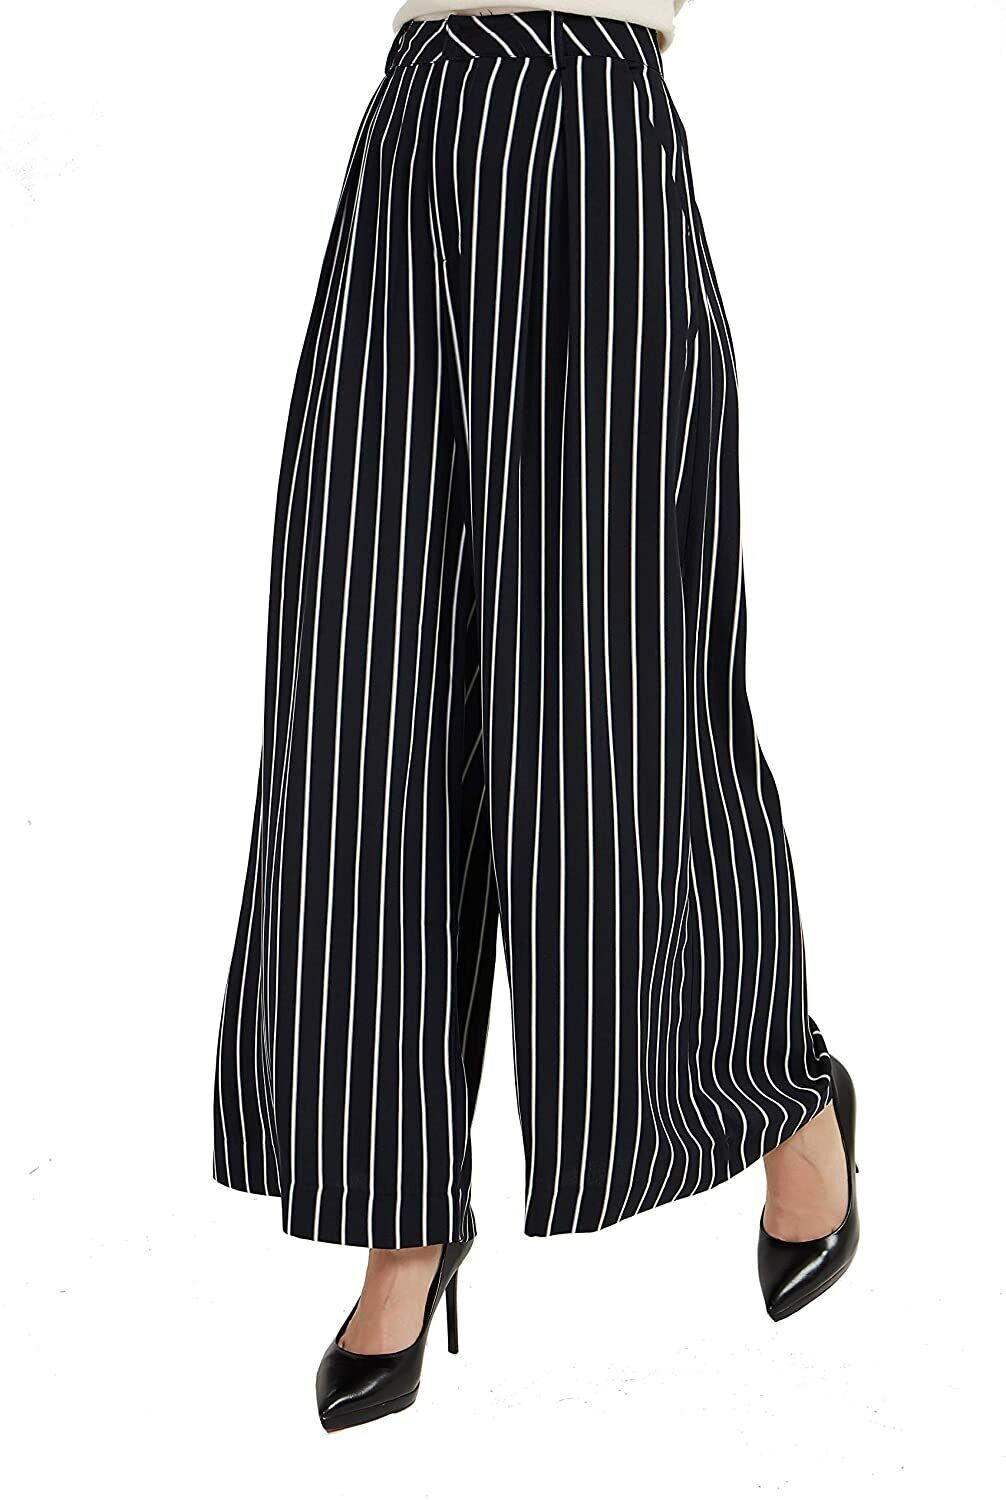 Tronjori Women High Waist Casual Wide Leg Long Palazzo Pants Trousers  Regular Si | eBay